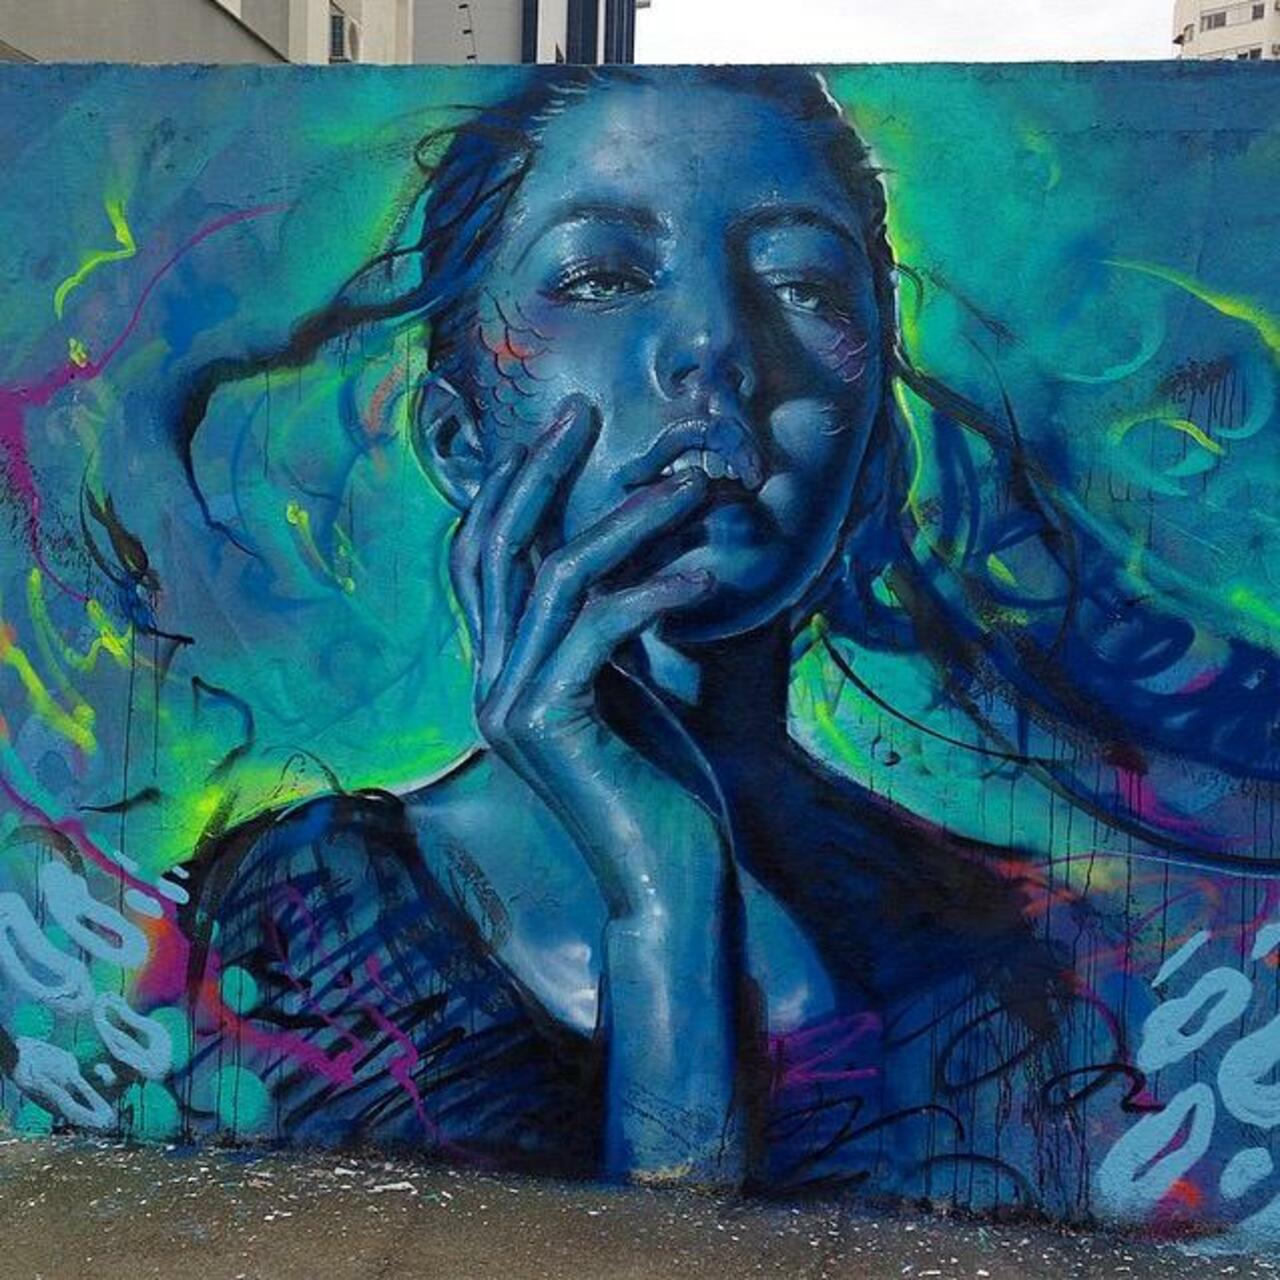 Thiago Valdi new Street Art piece titled 'Day Dreamer' #art #mural #graffiti #streetart http://t.co/3UodbQm48I …… http://twitter.com/charlesjackso14/status/652732463609958400